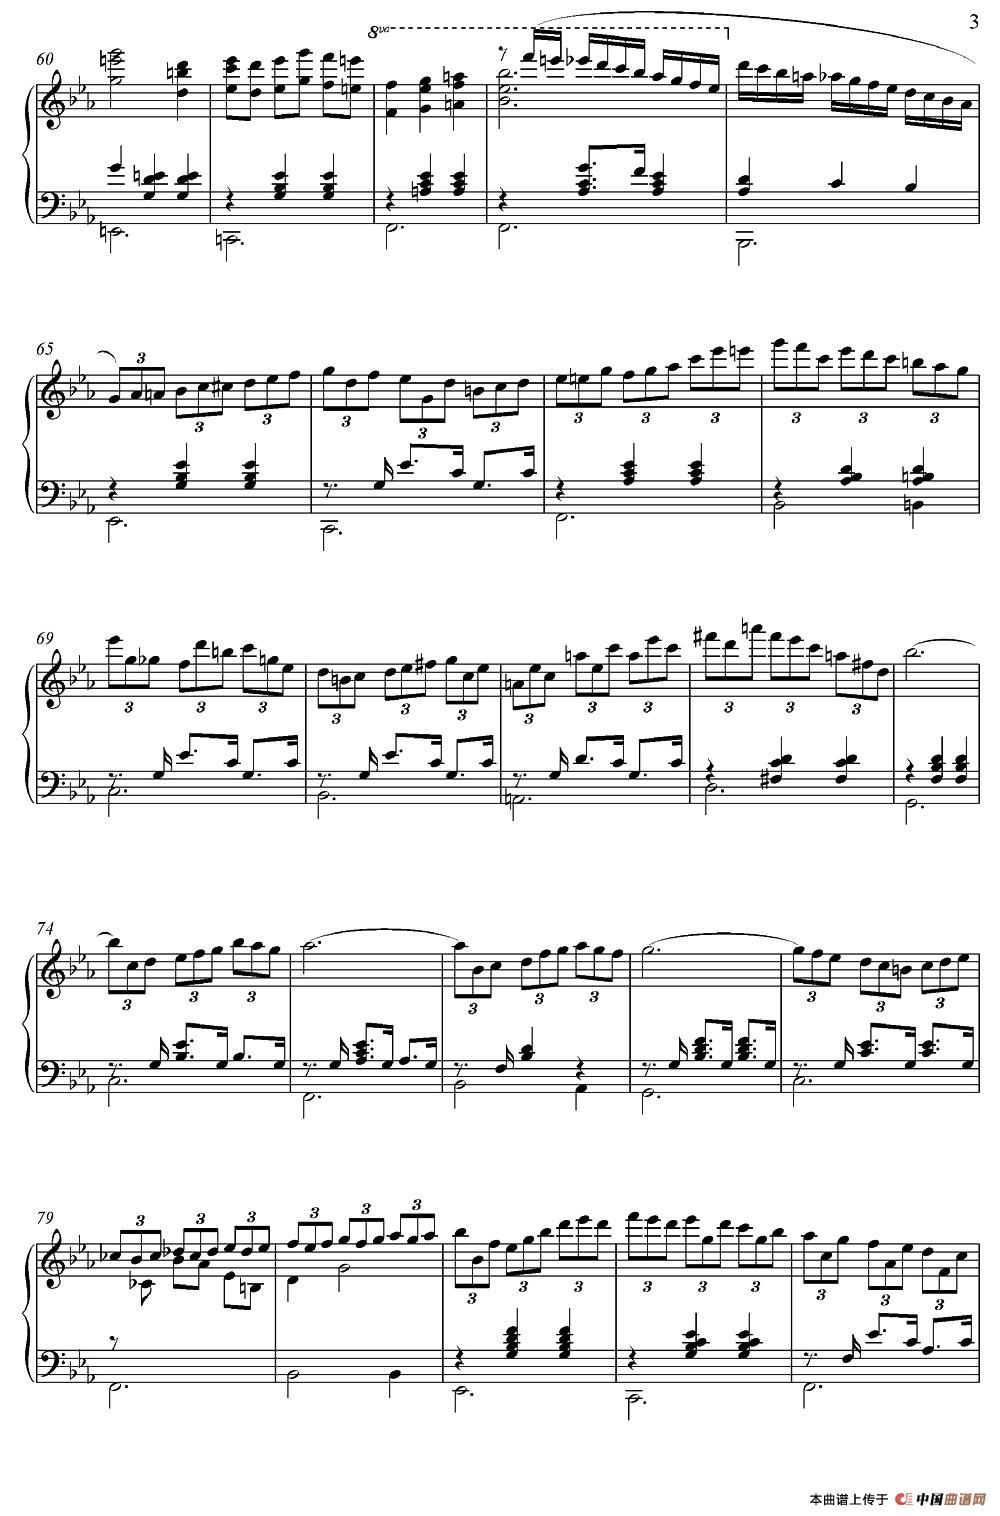 《Legend Of 1900》钢琴曲谱图分享